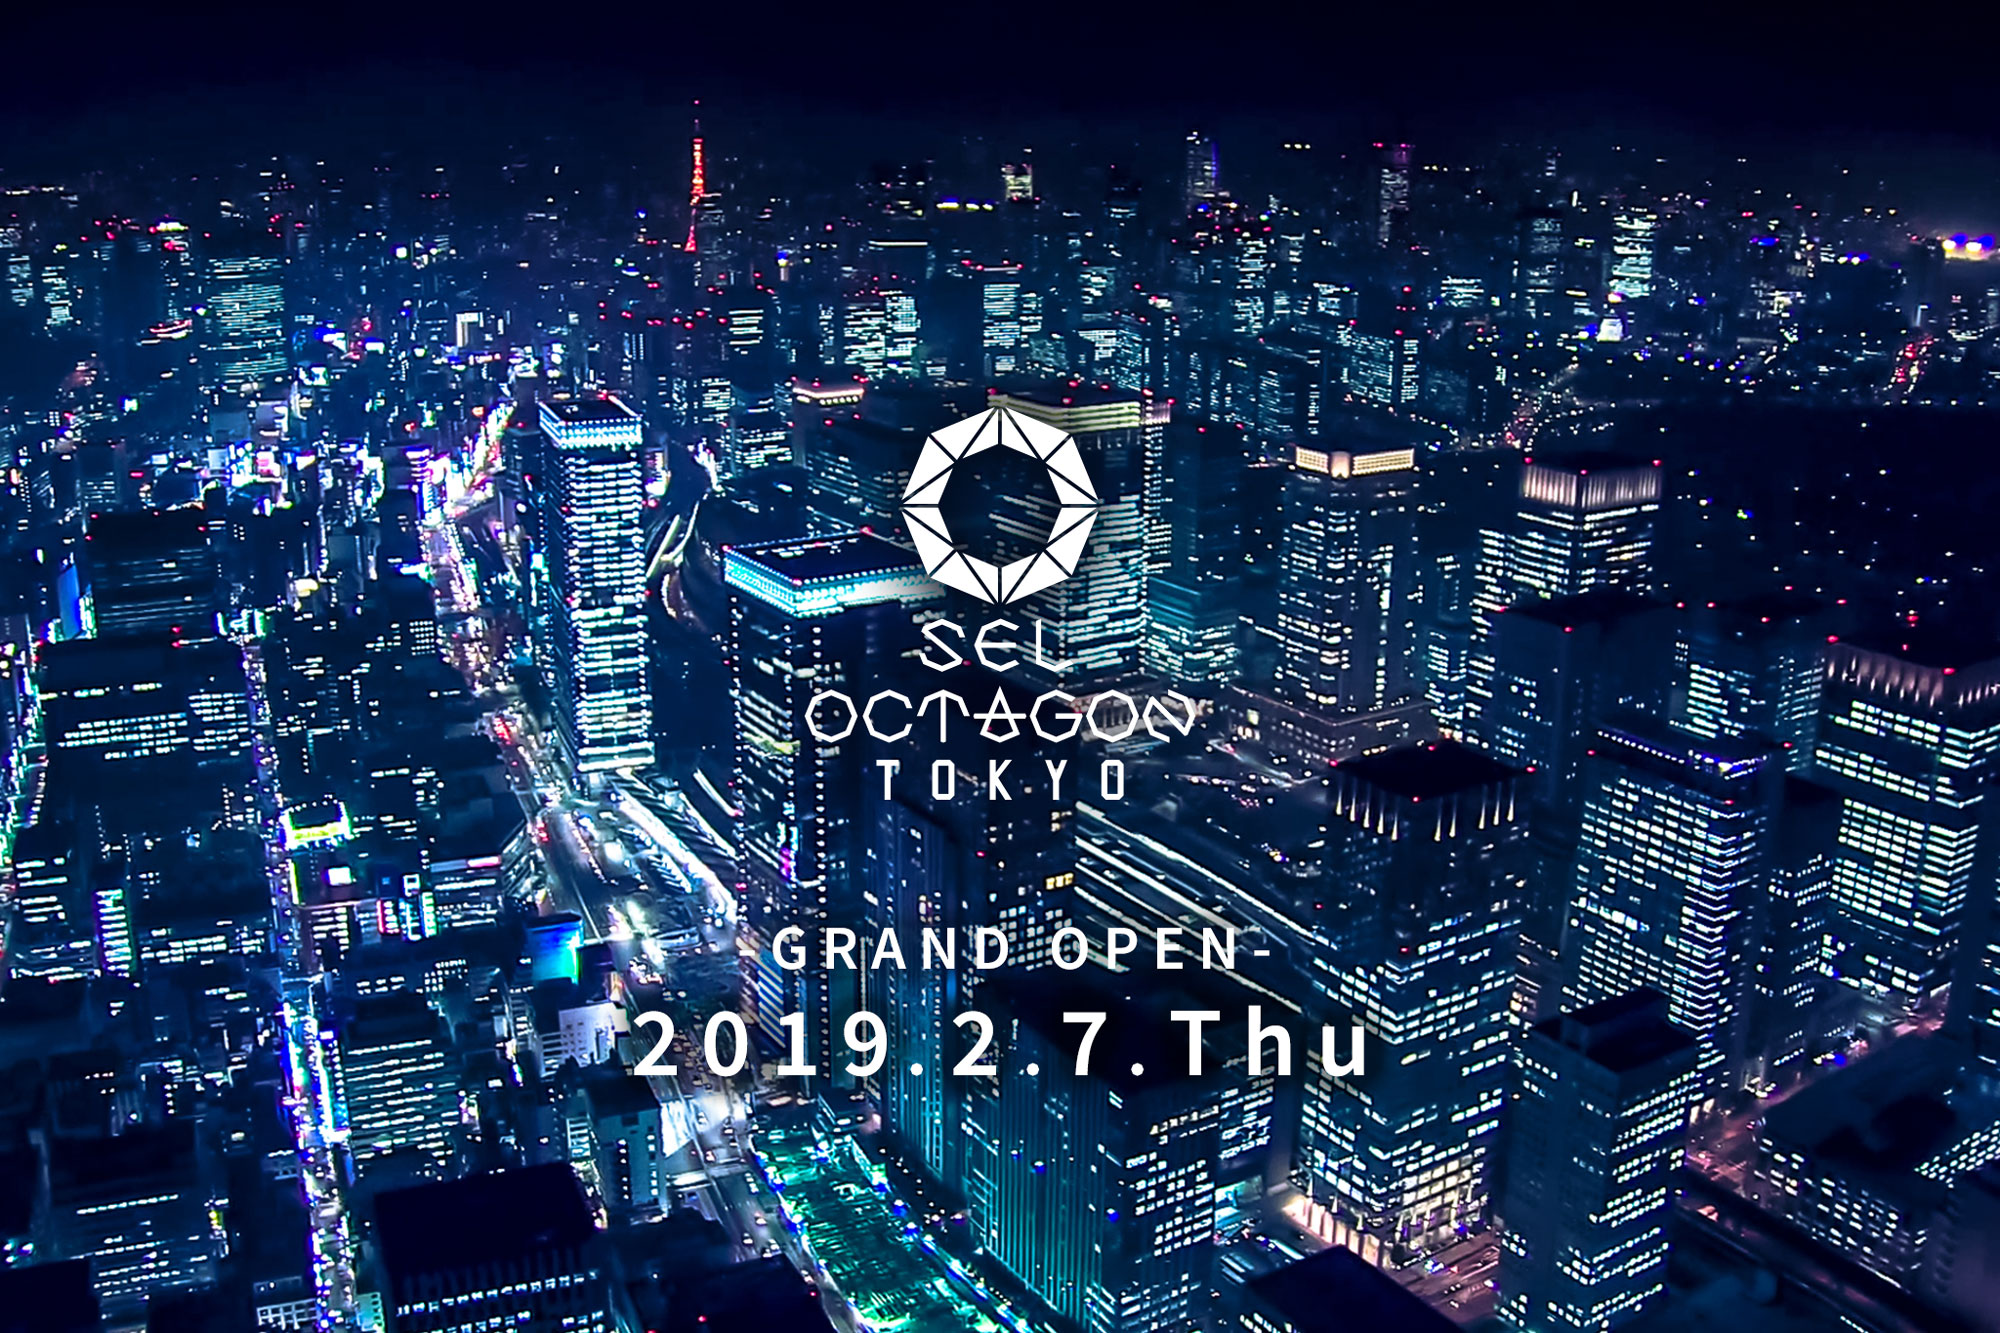 SEL OCTAGON TOKYO